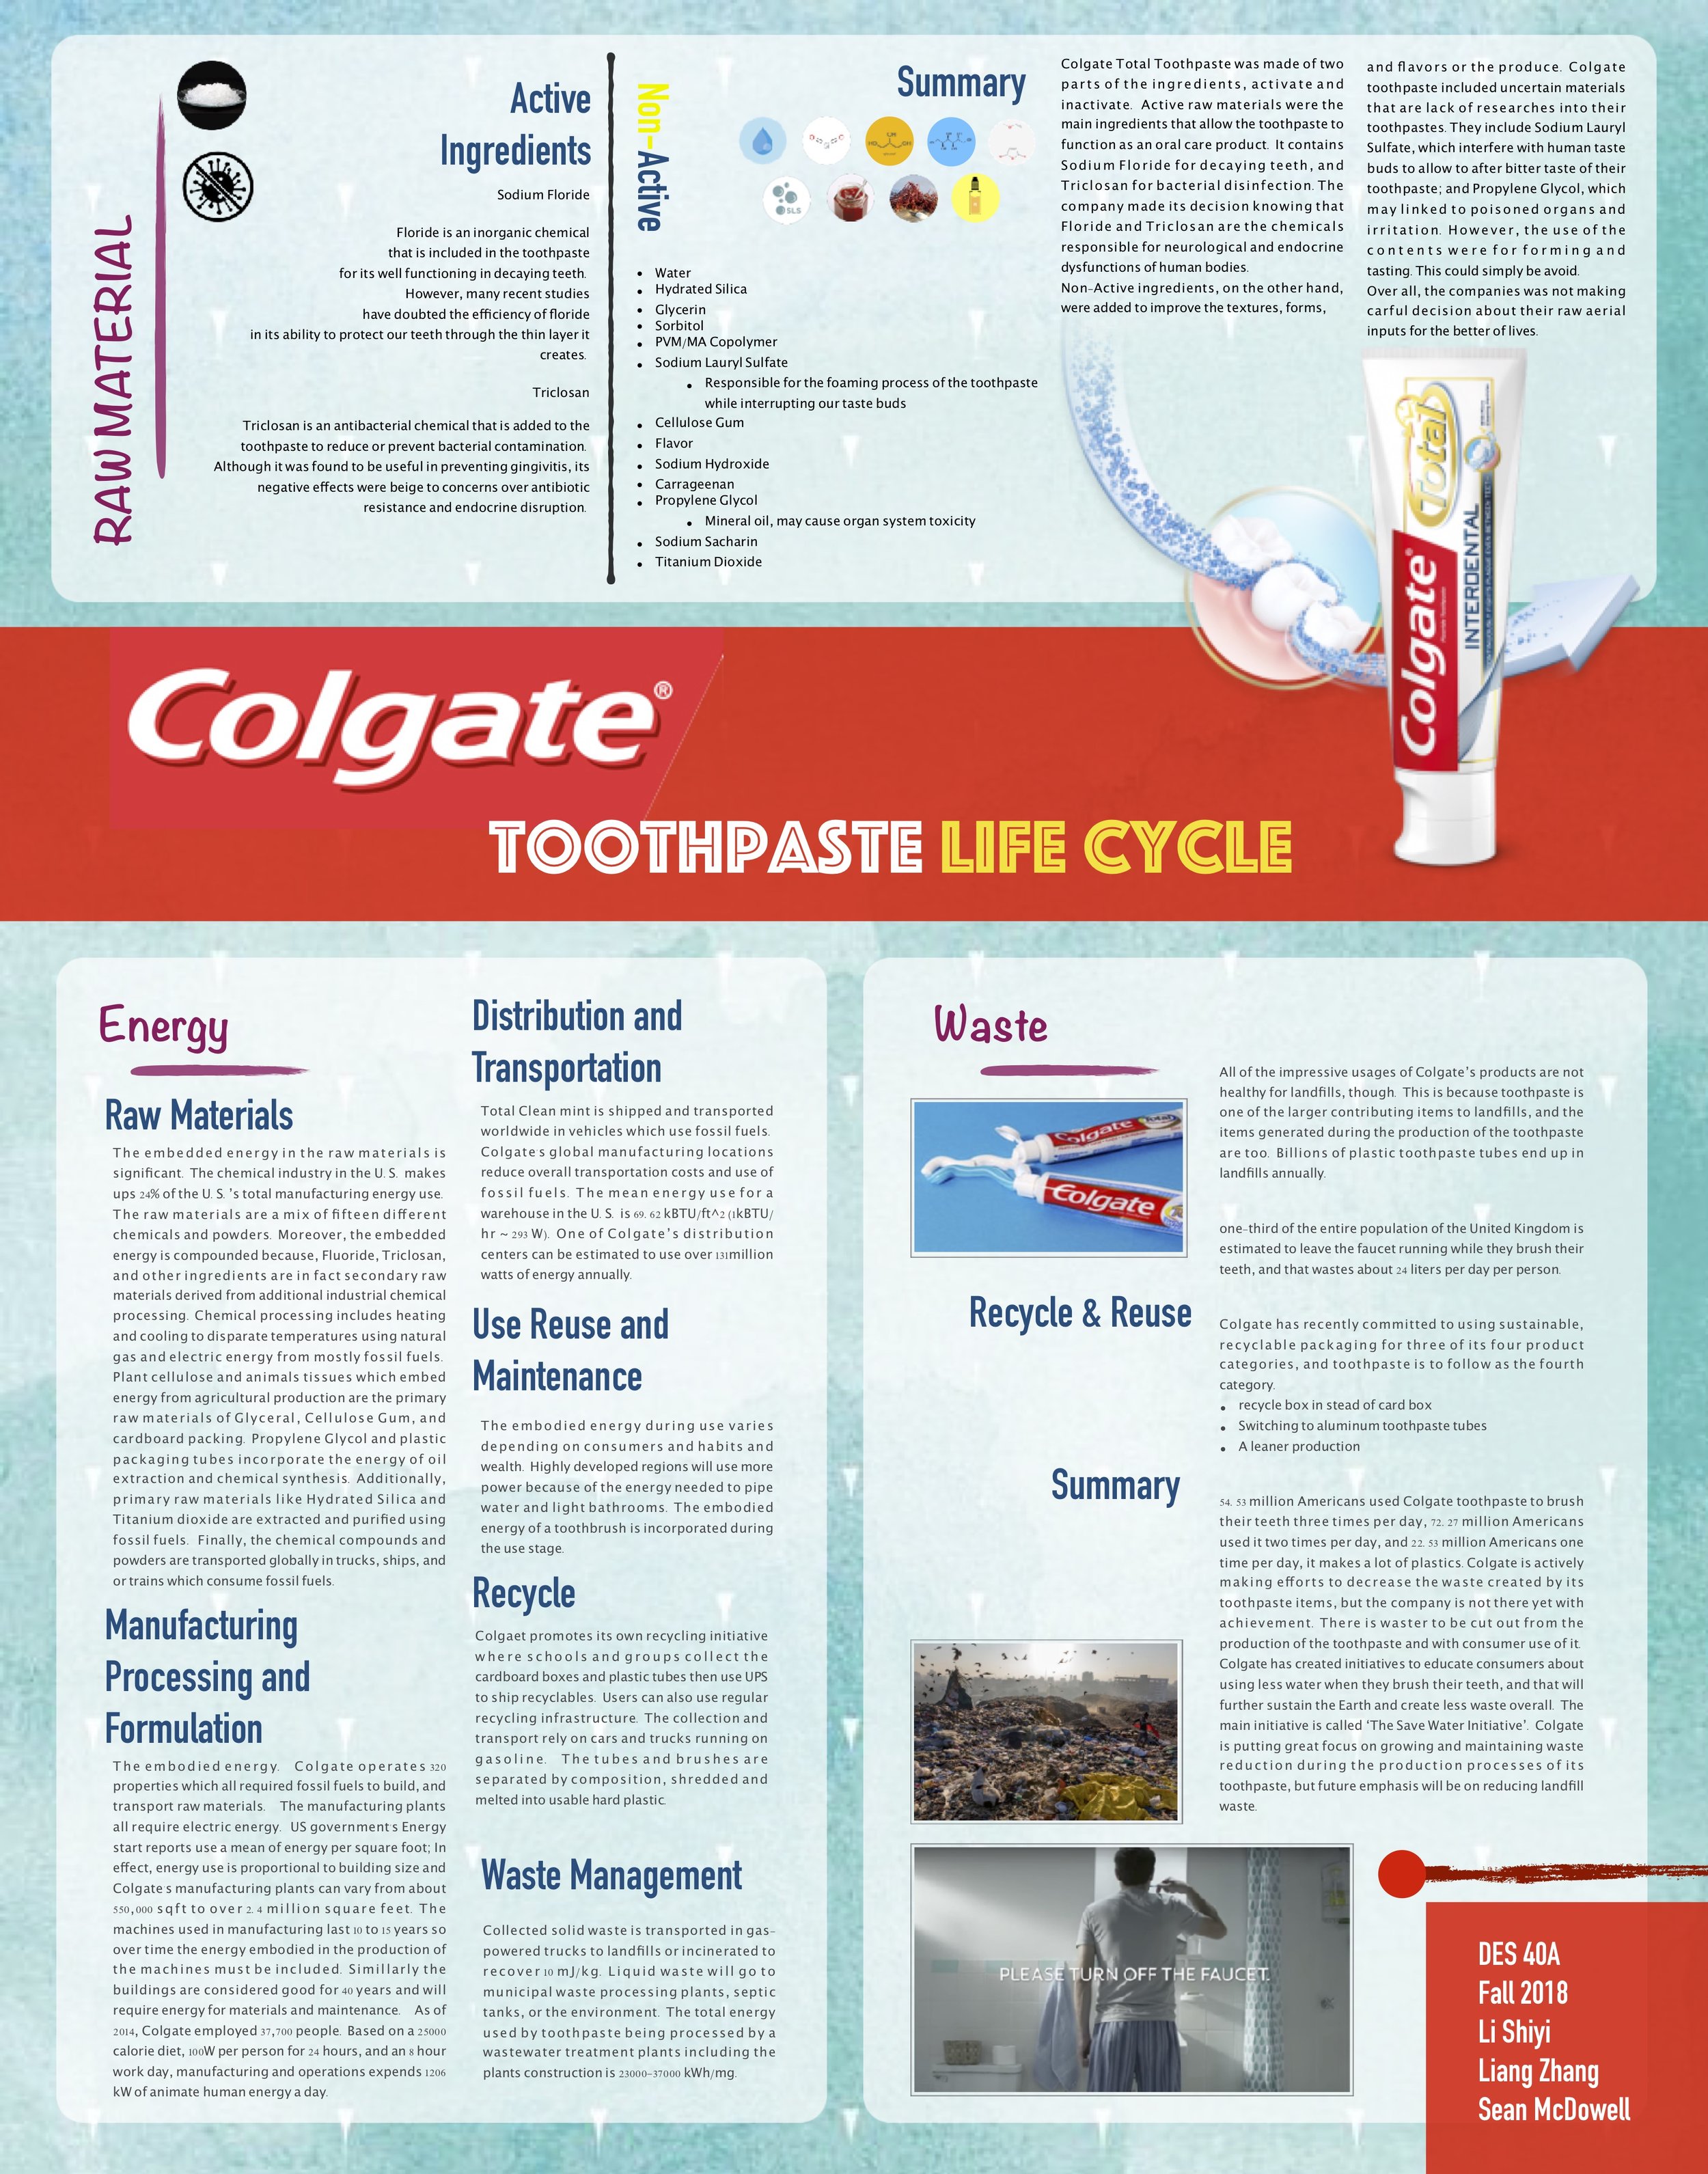 Toothpaste Abrasiveness Chart 2018